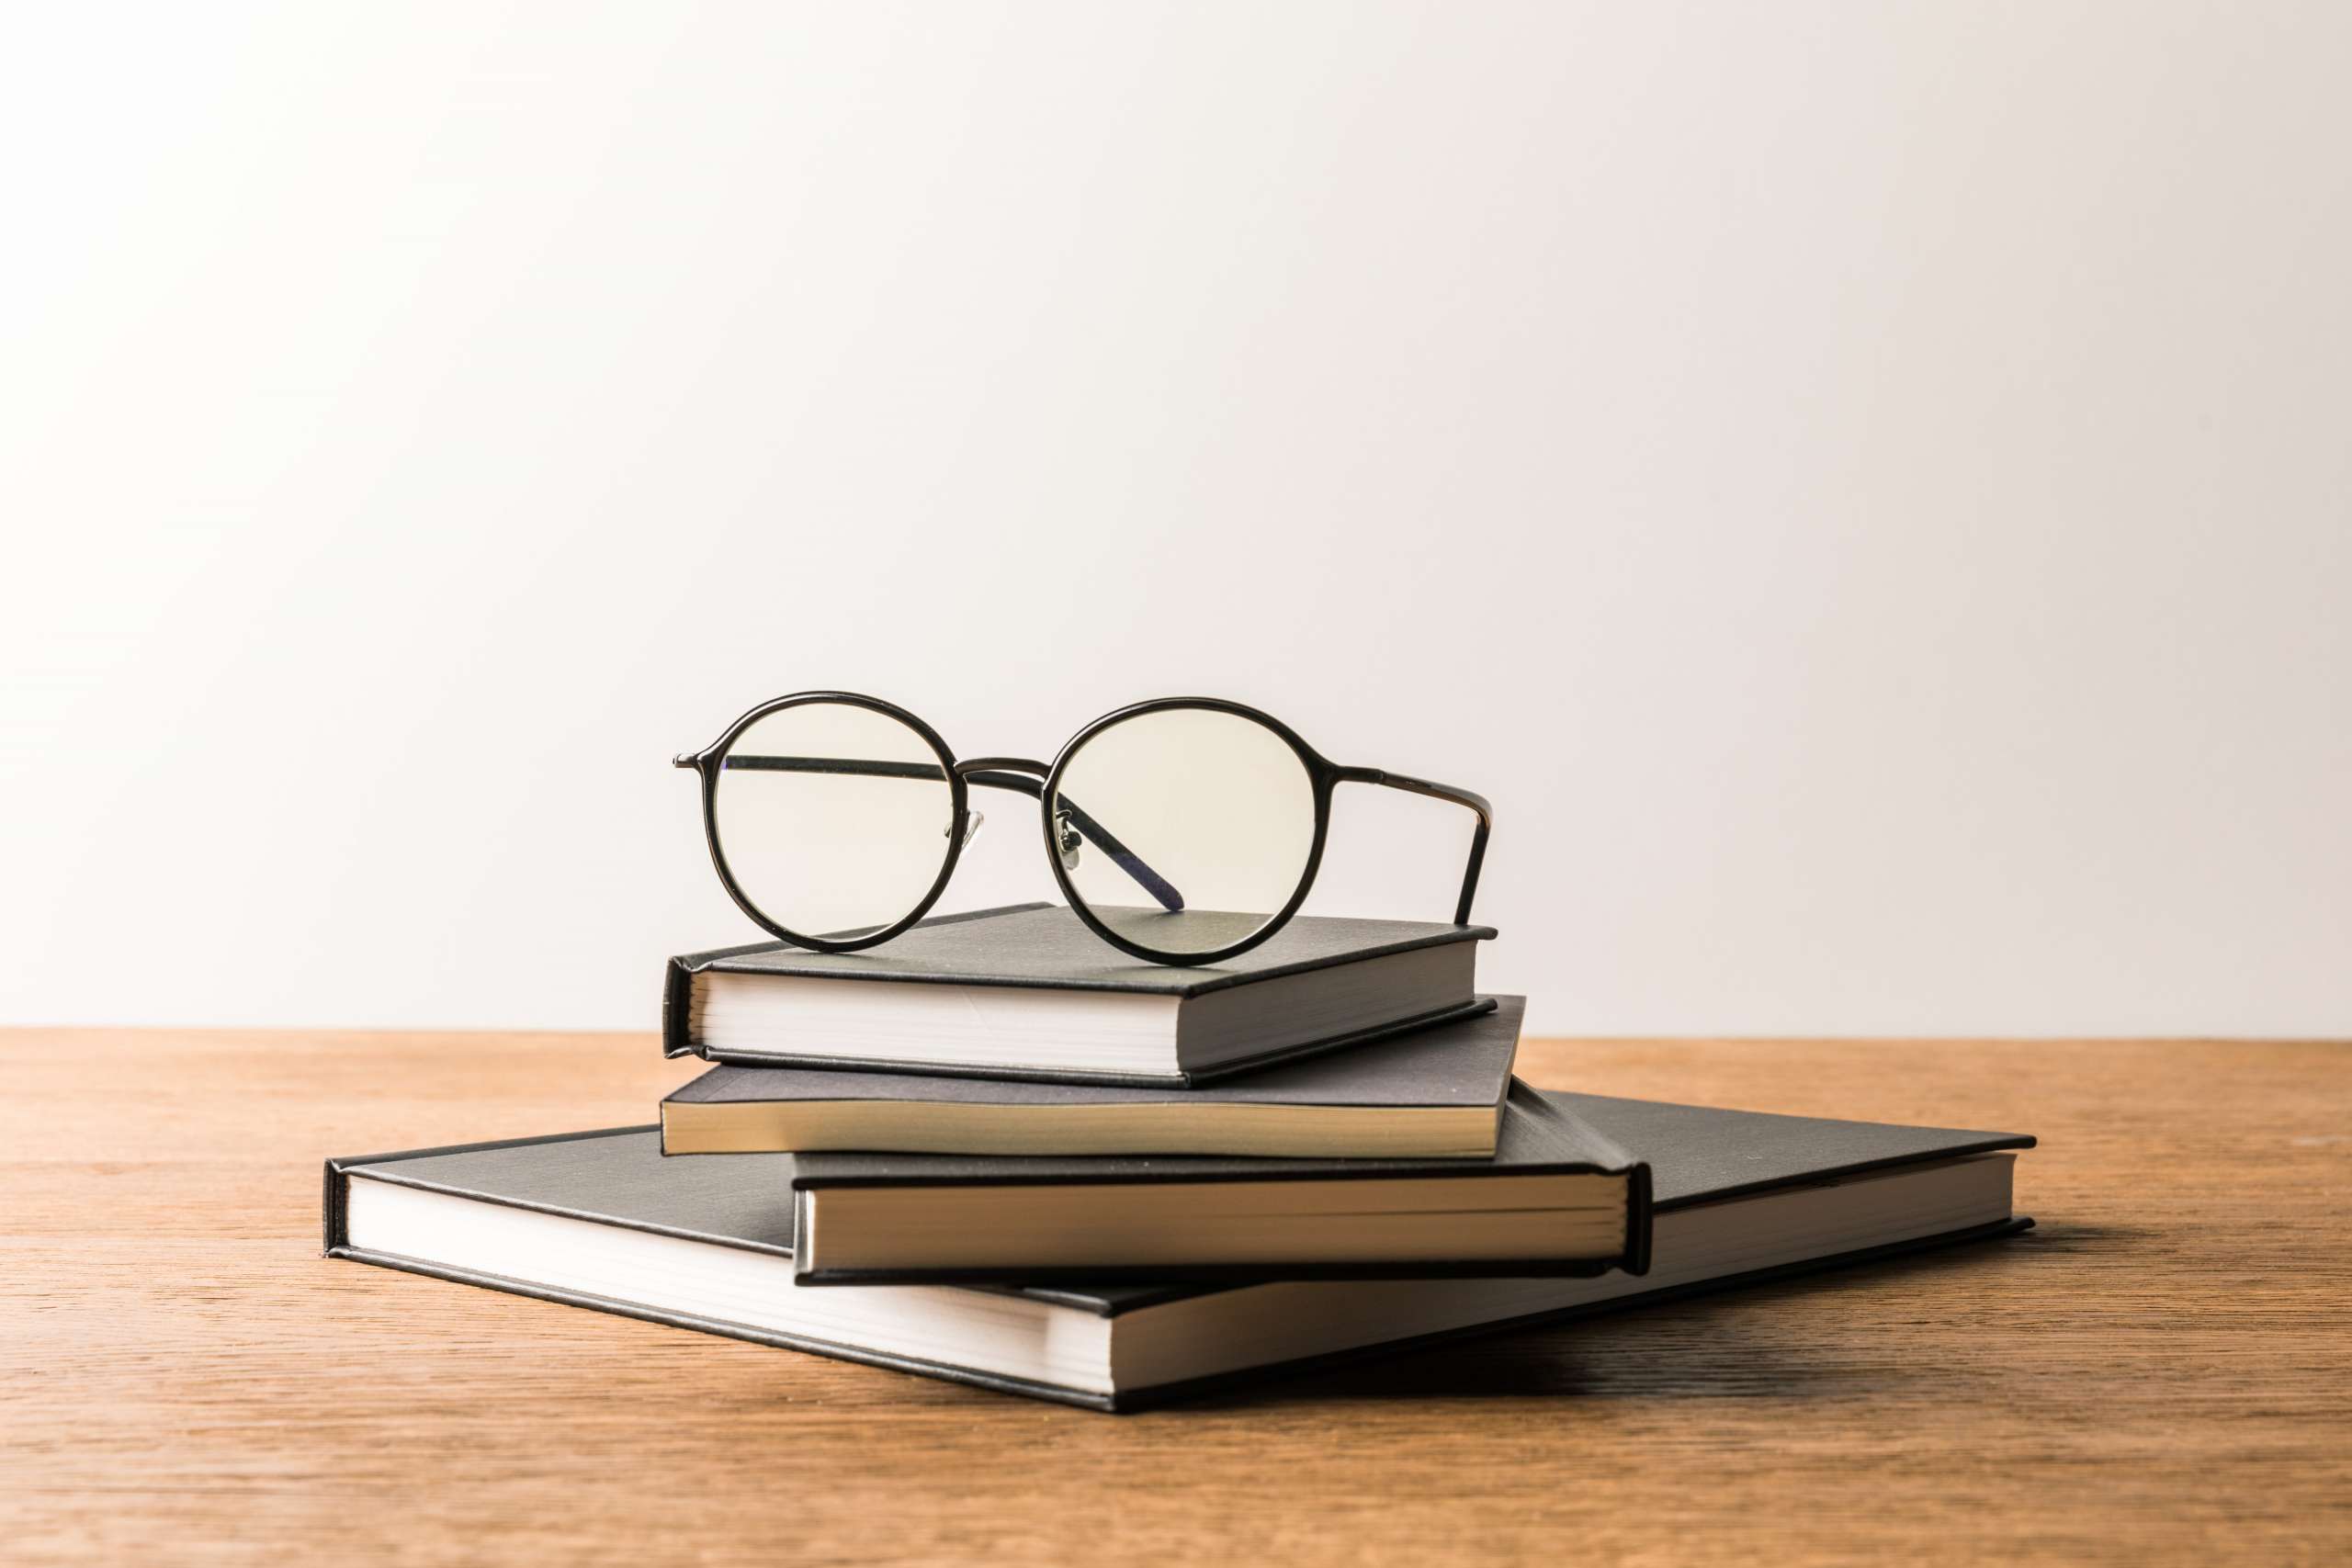 notebooks and eyeglasses